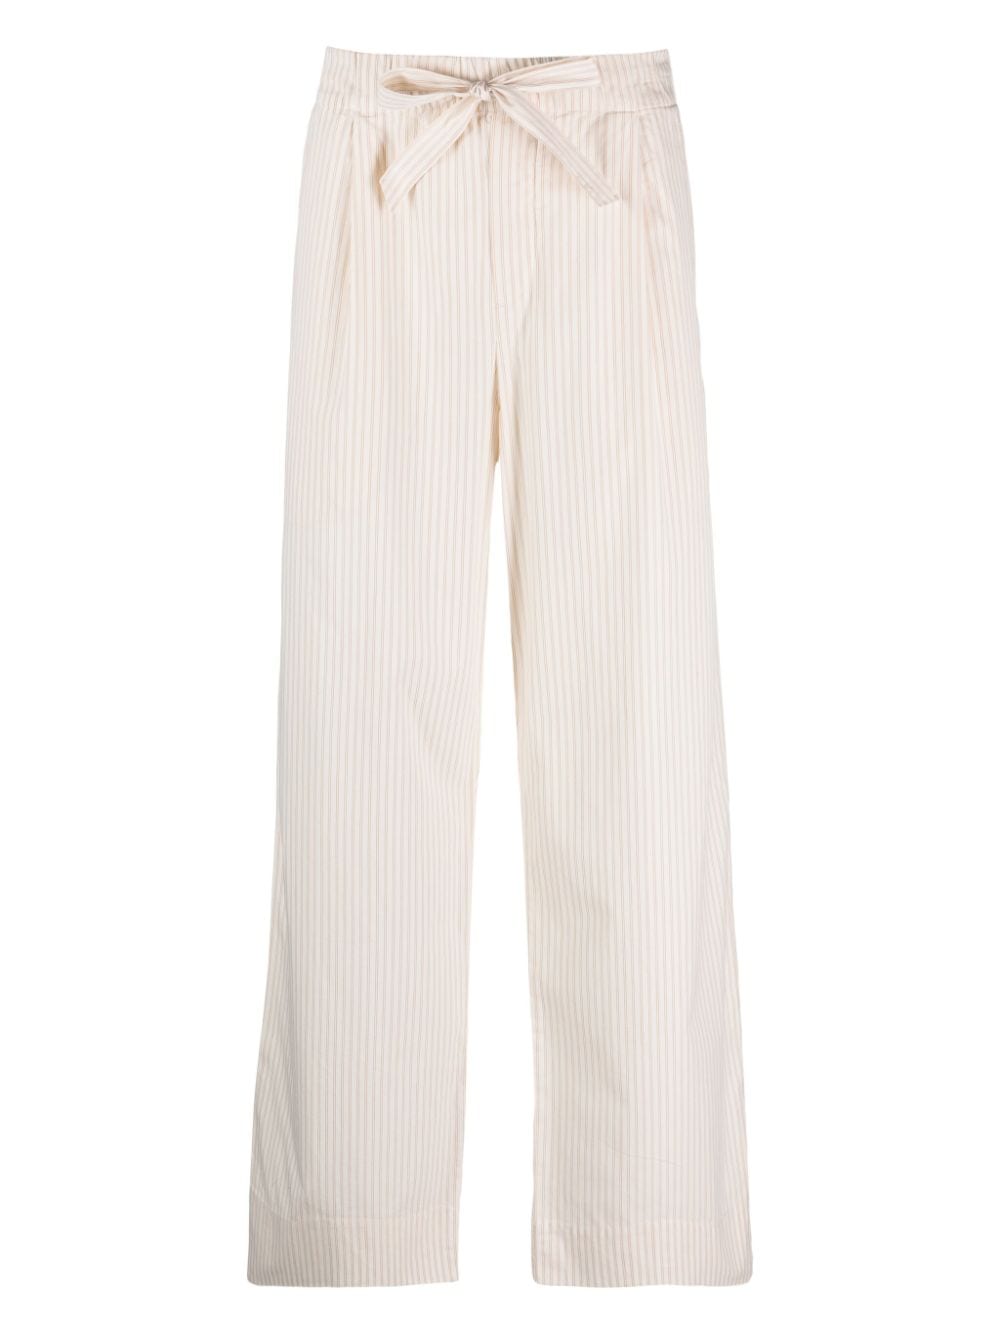 TEKLA x Birkenstock pinstripe pyjama pants - Toni neutri